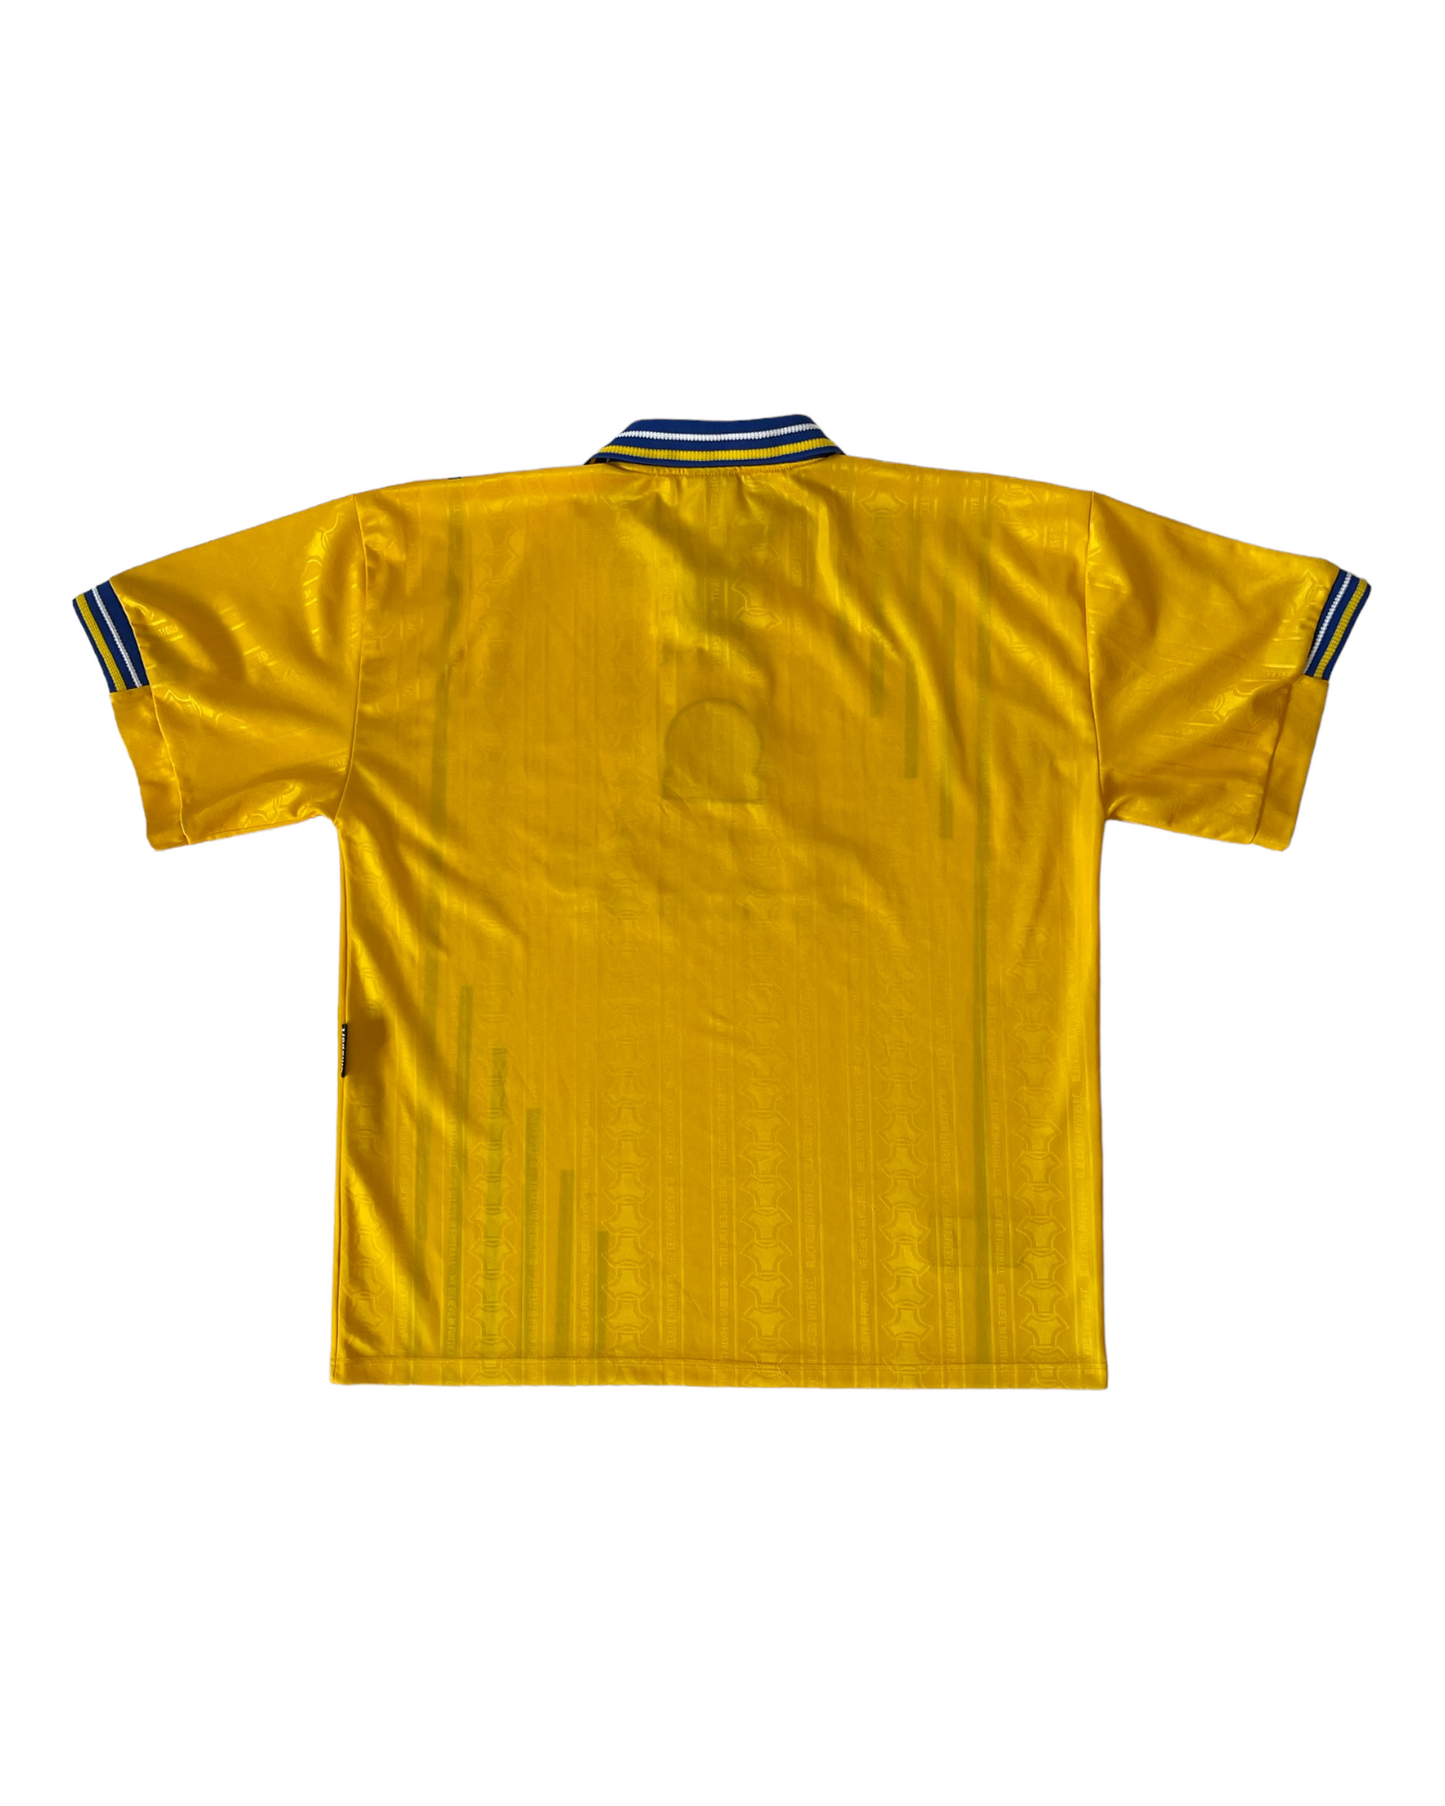 Blackburn Rovers FC 1998-1999 Uhlsport Away Football Shirt Size XL CIS Yellow